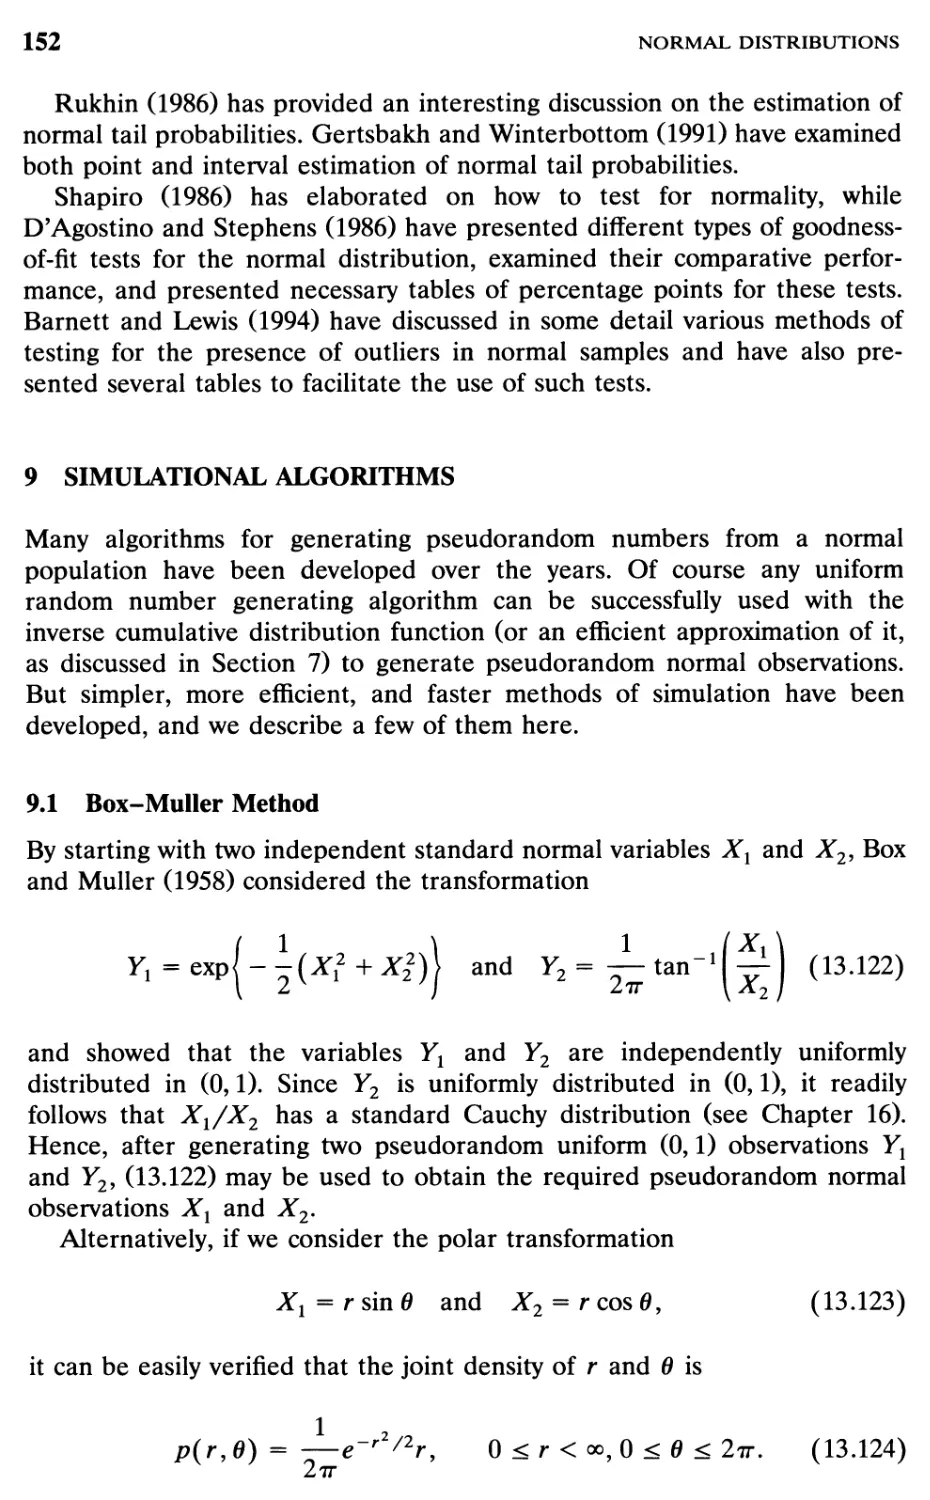 9 Simulational Algorithms, 152